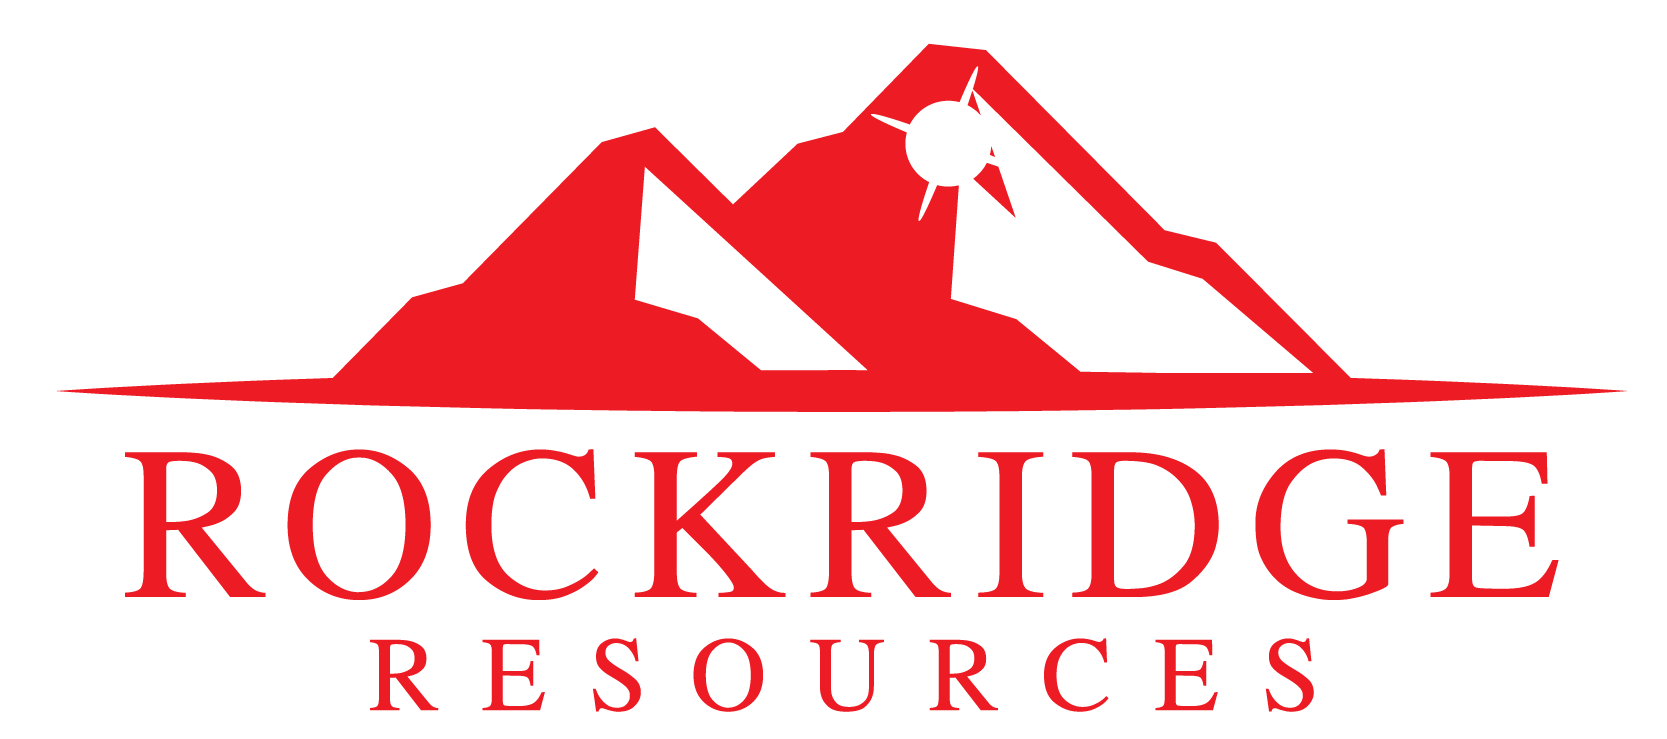 rockridge resources logo